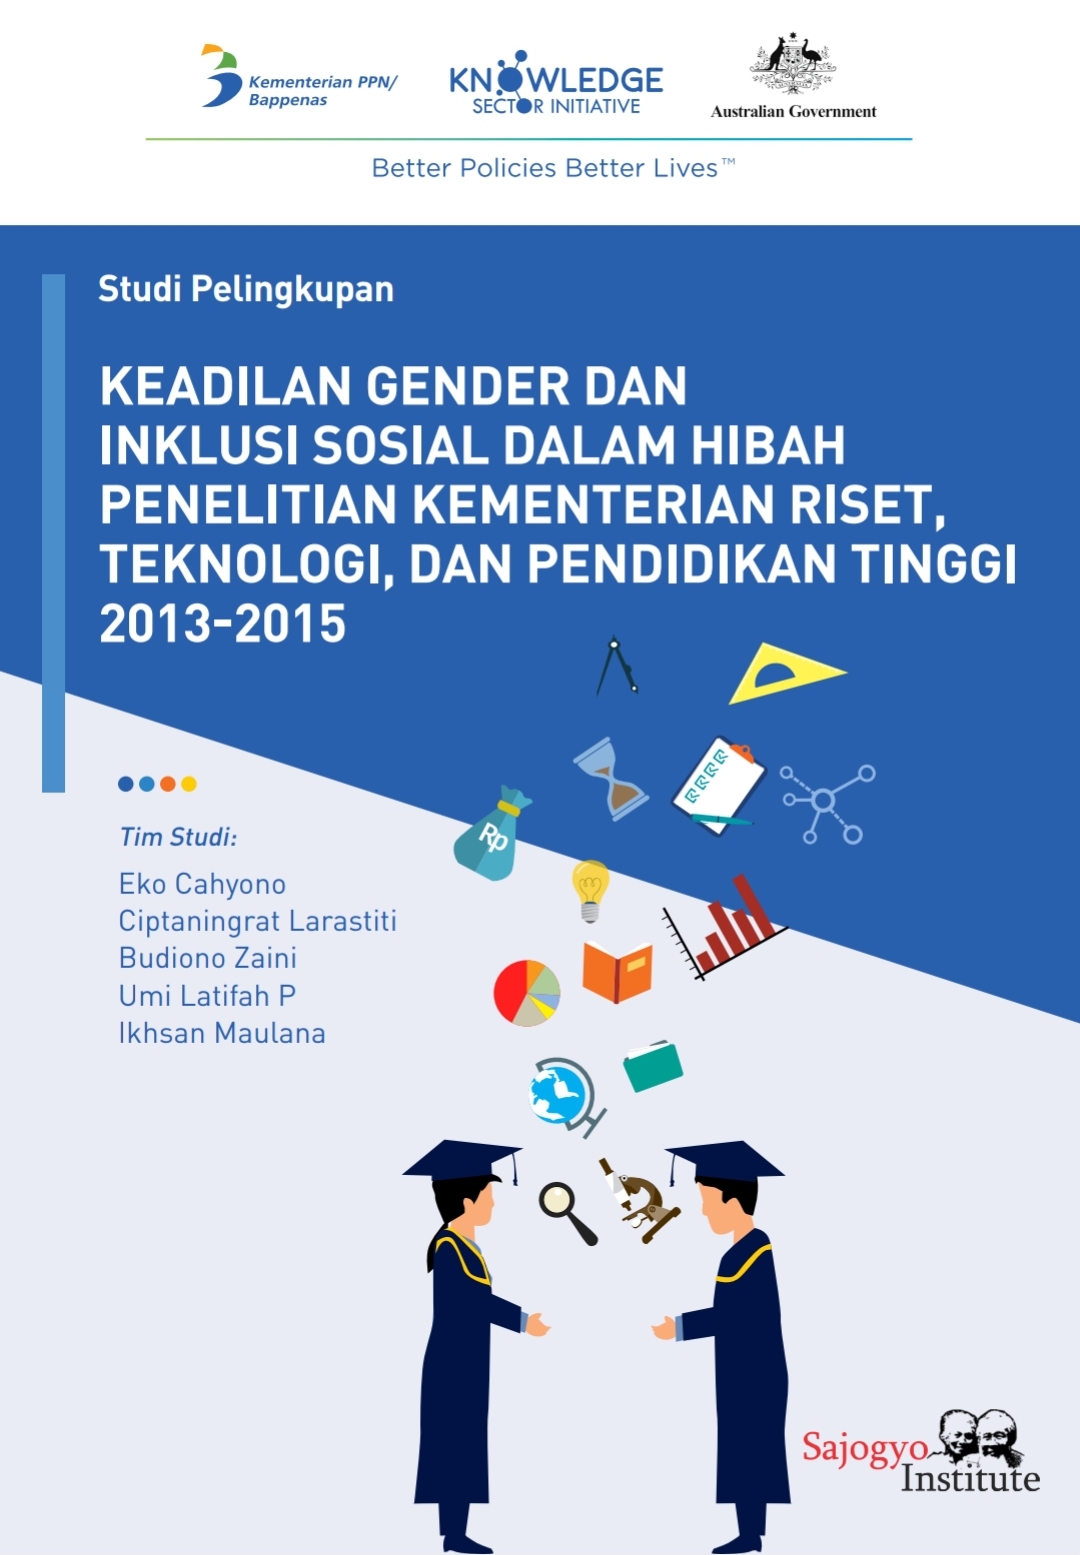 Keadilan Gender dan Inklusi Sosial Dalam Hibah Penelitian kementerian Riset, Teknologi, dan Pendidikan Tinggi 2013-2015